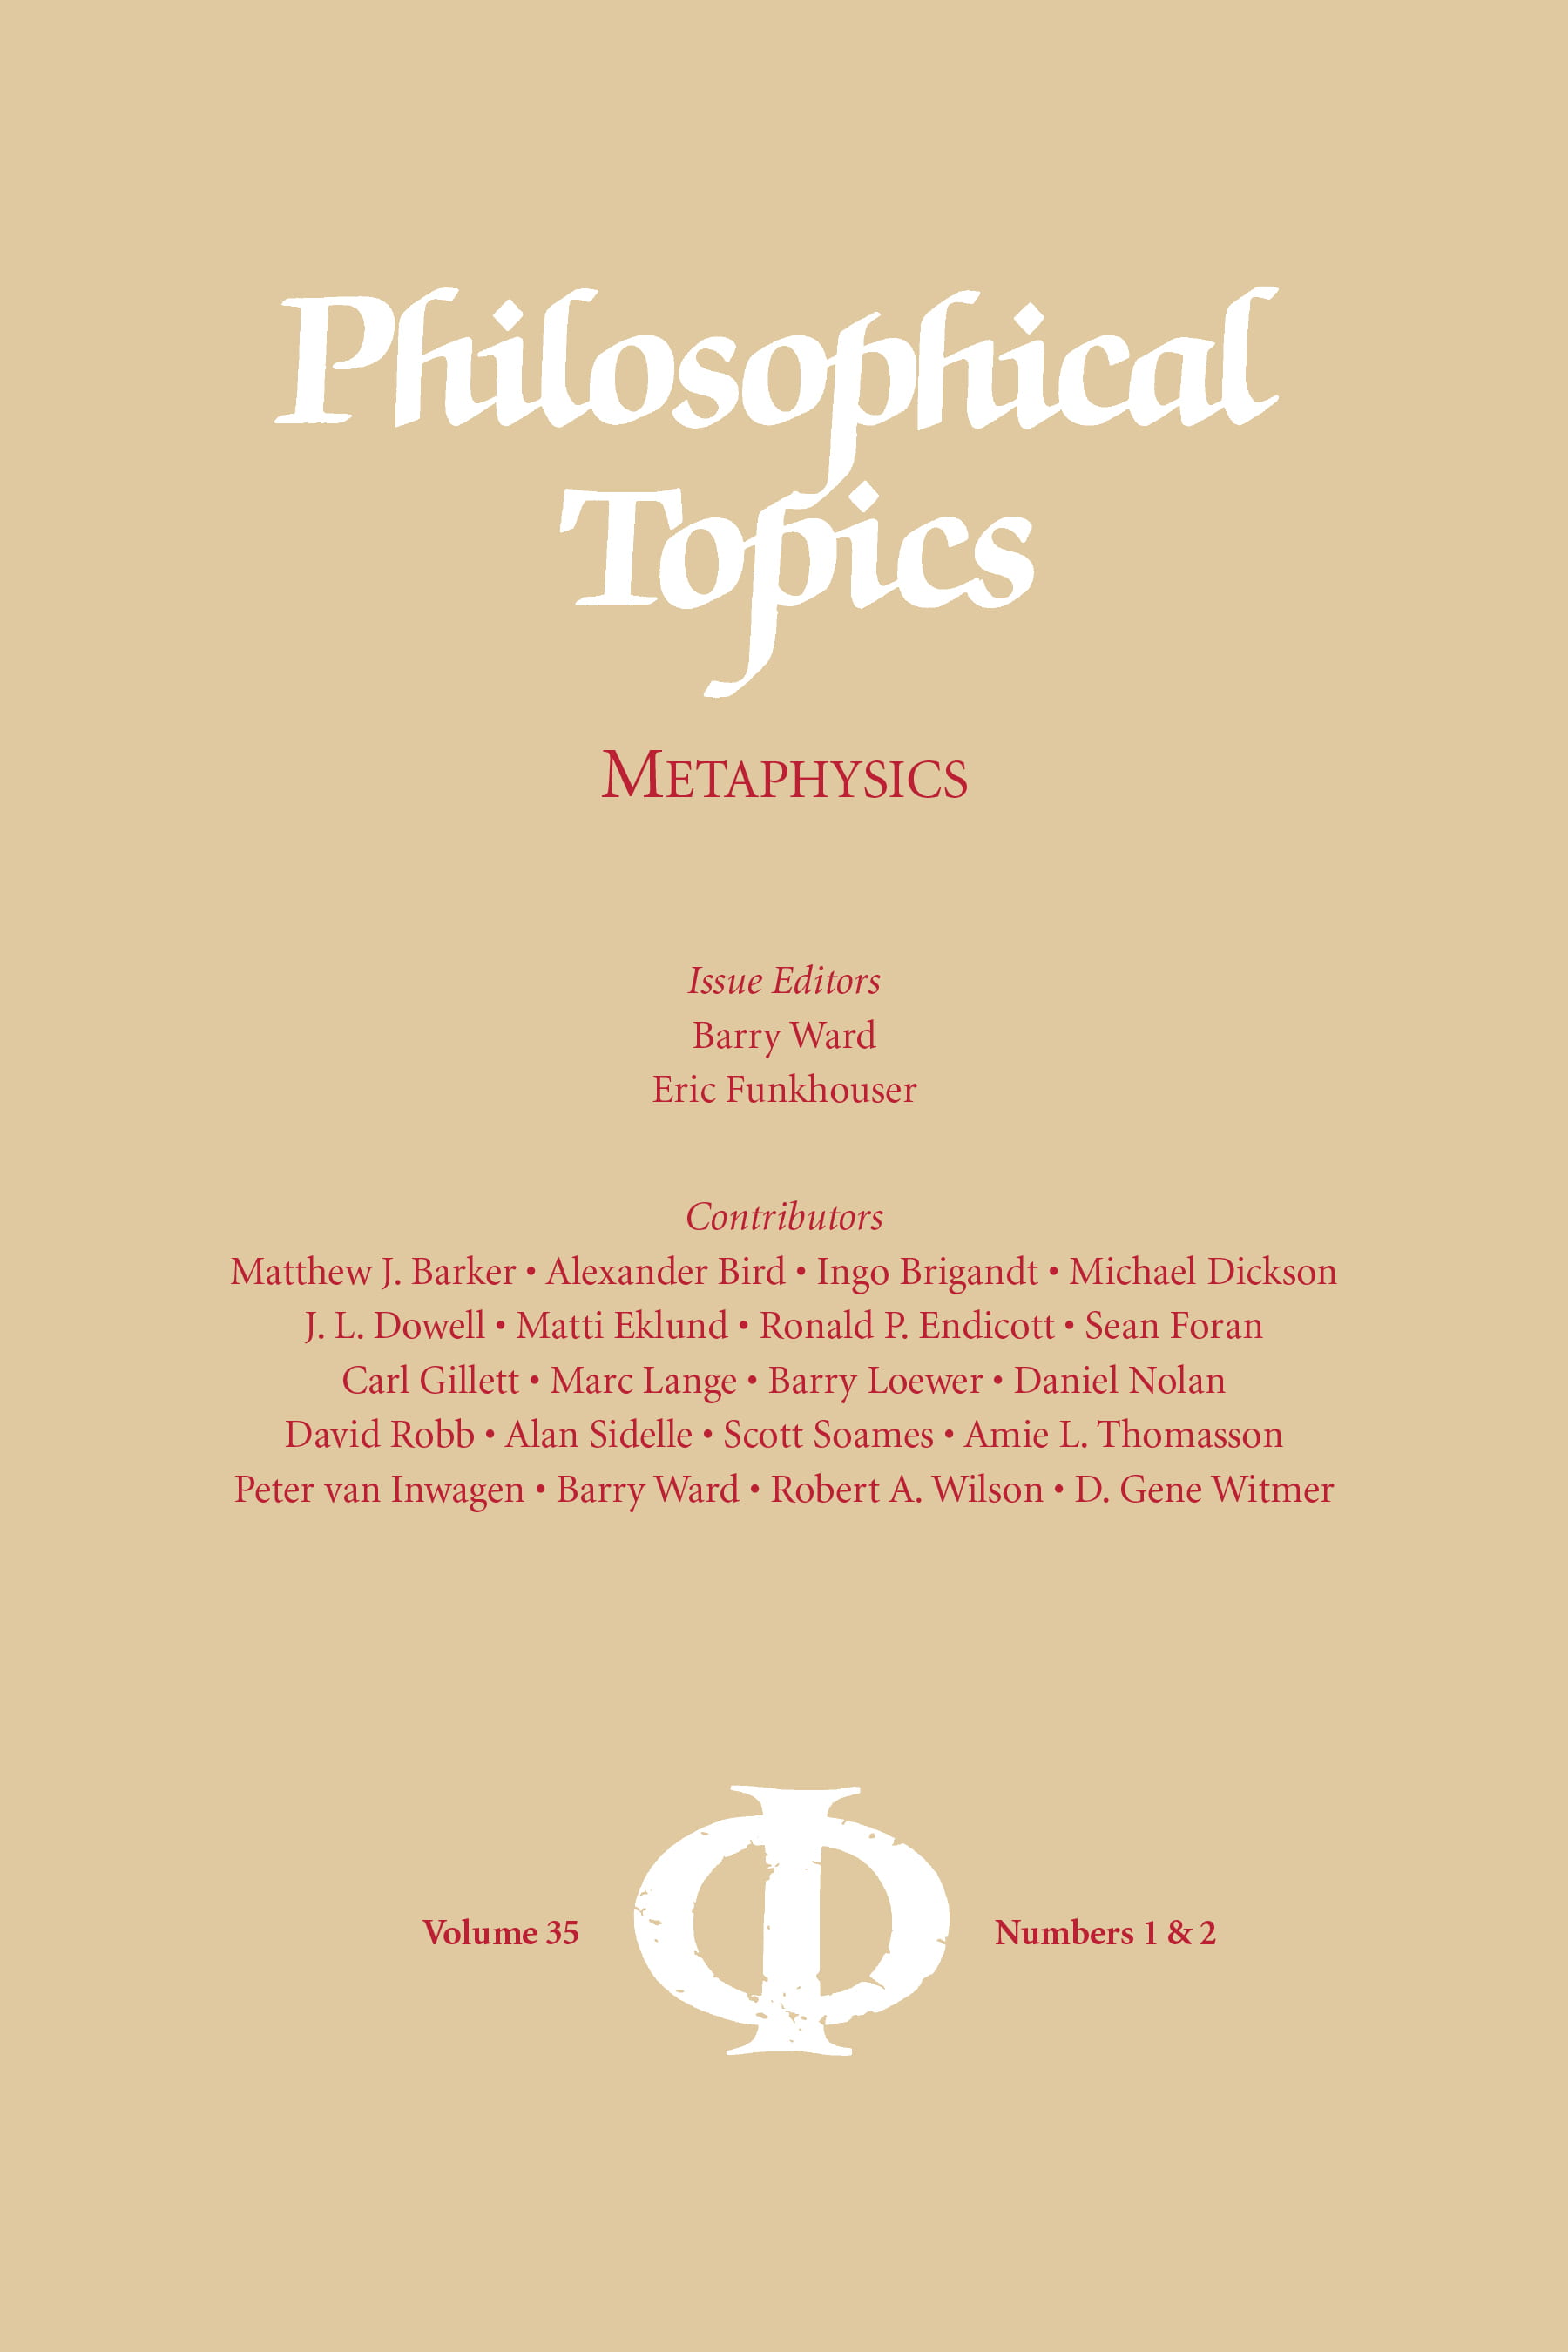 metaphysics essay topics